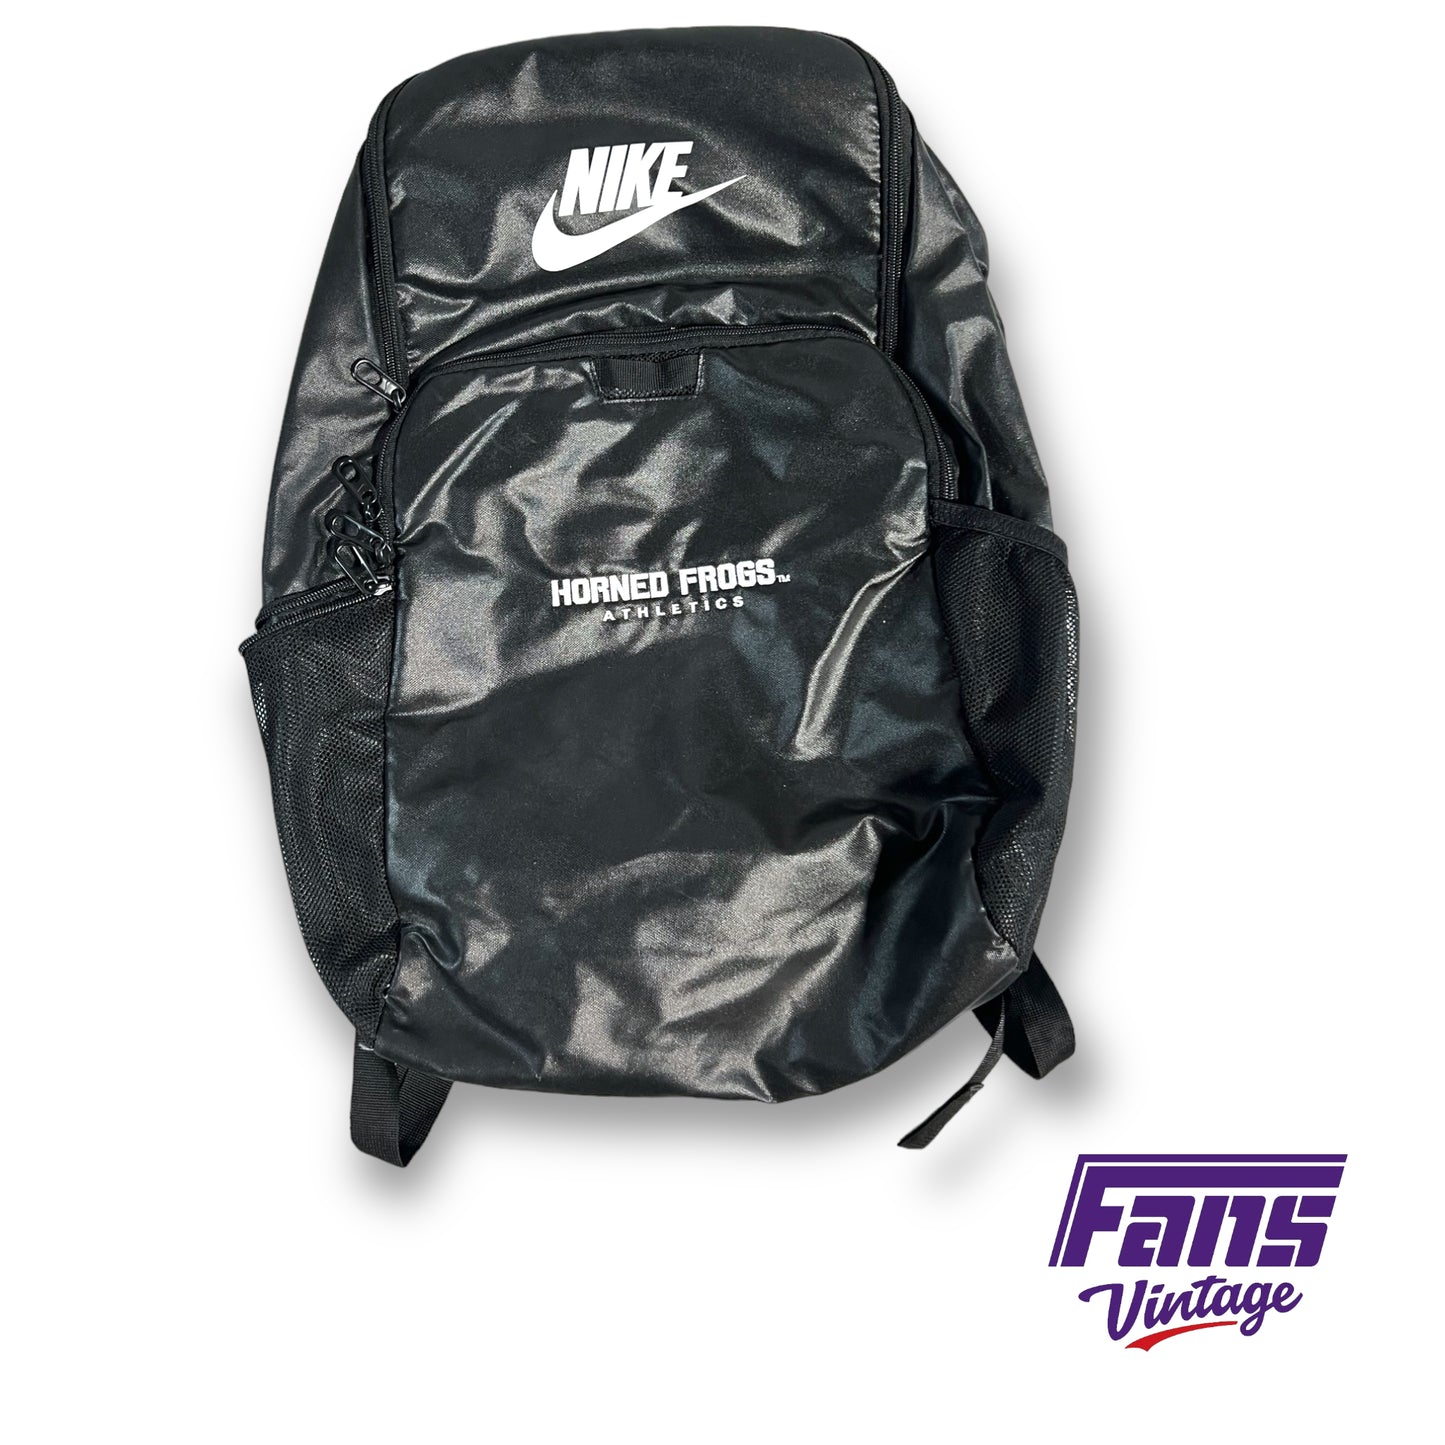 Nike TCU team issued faux leather backpack